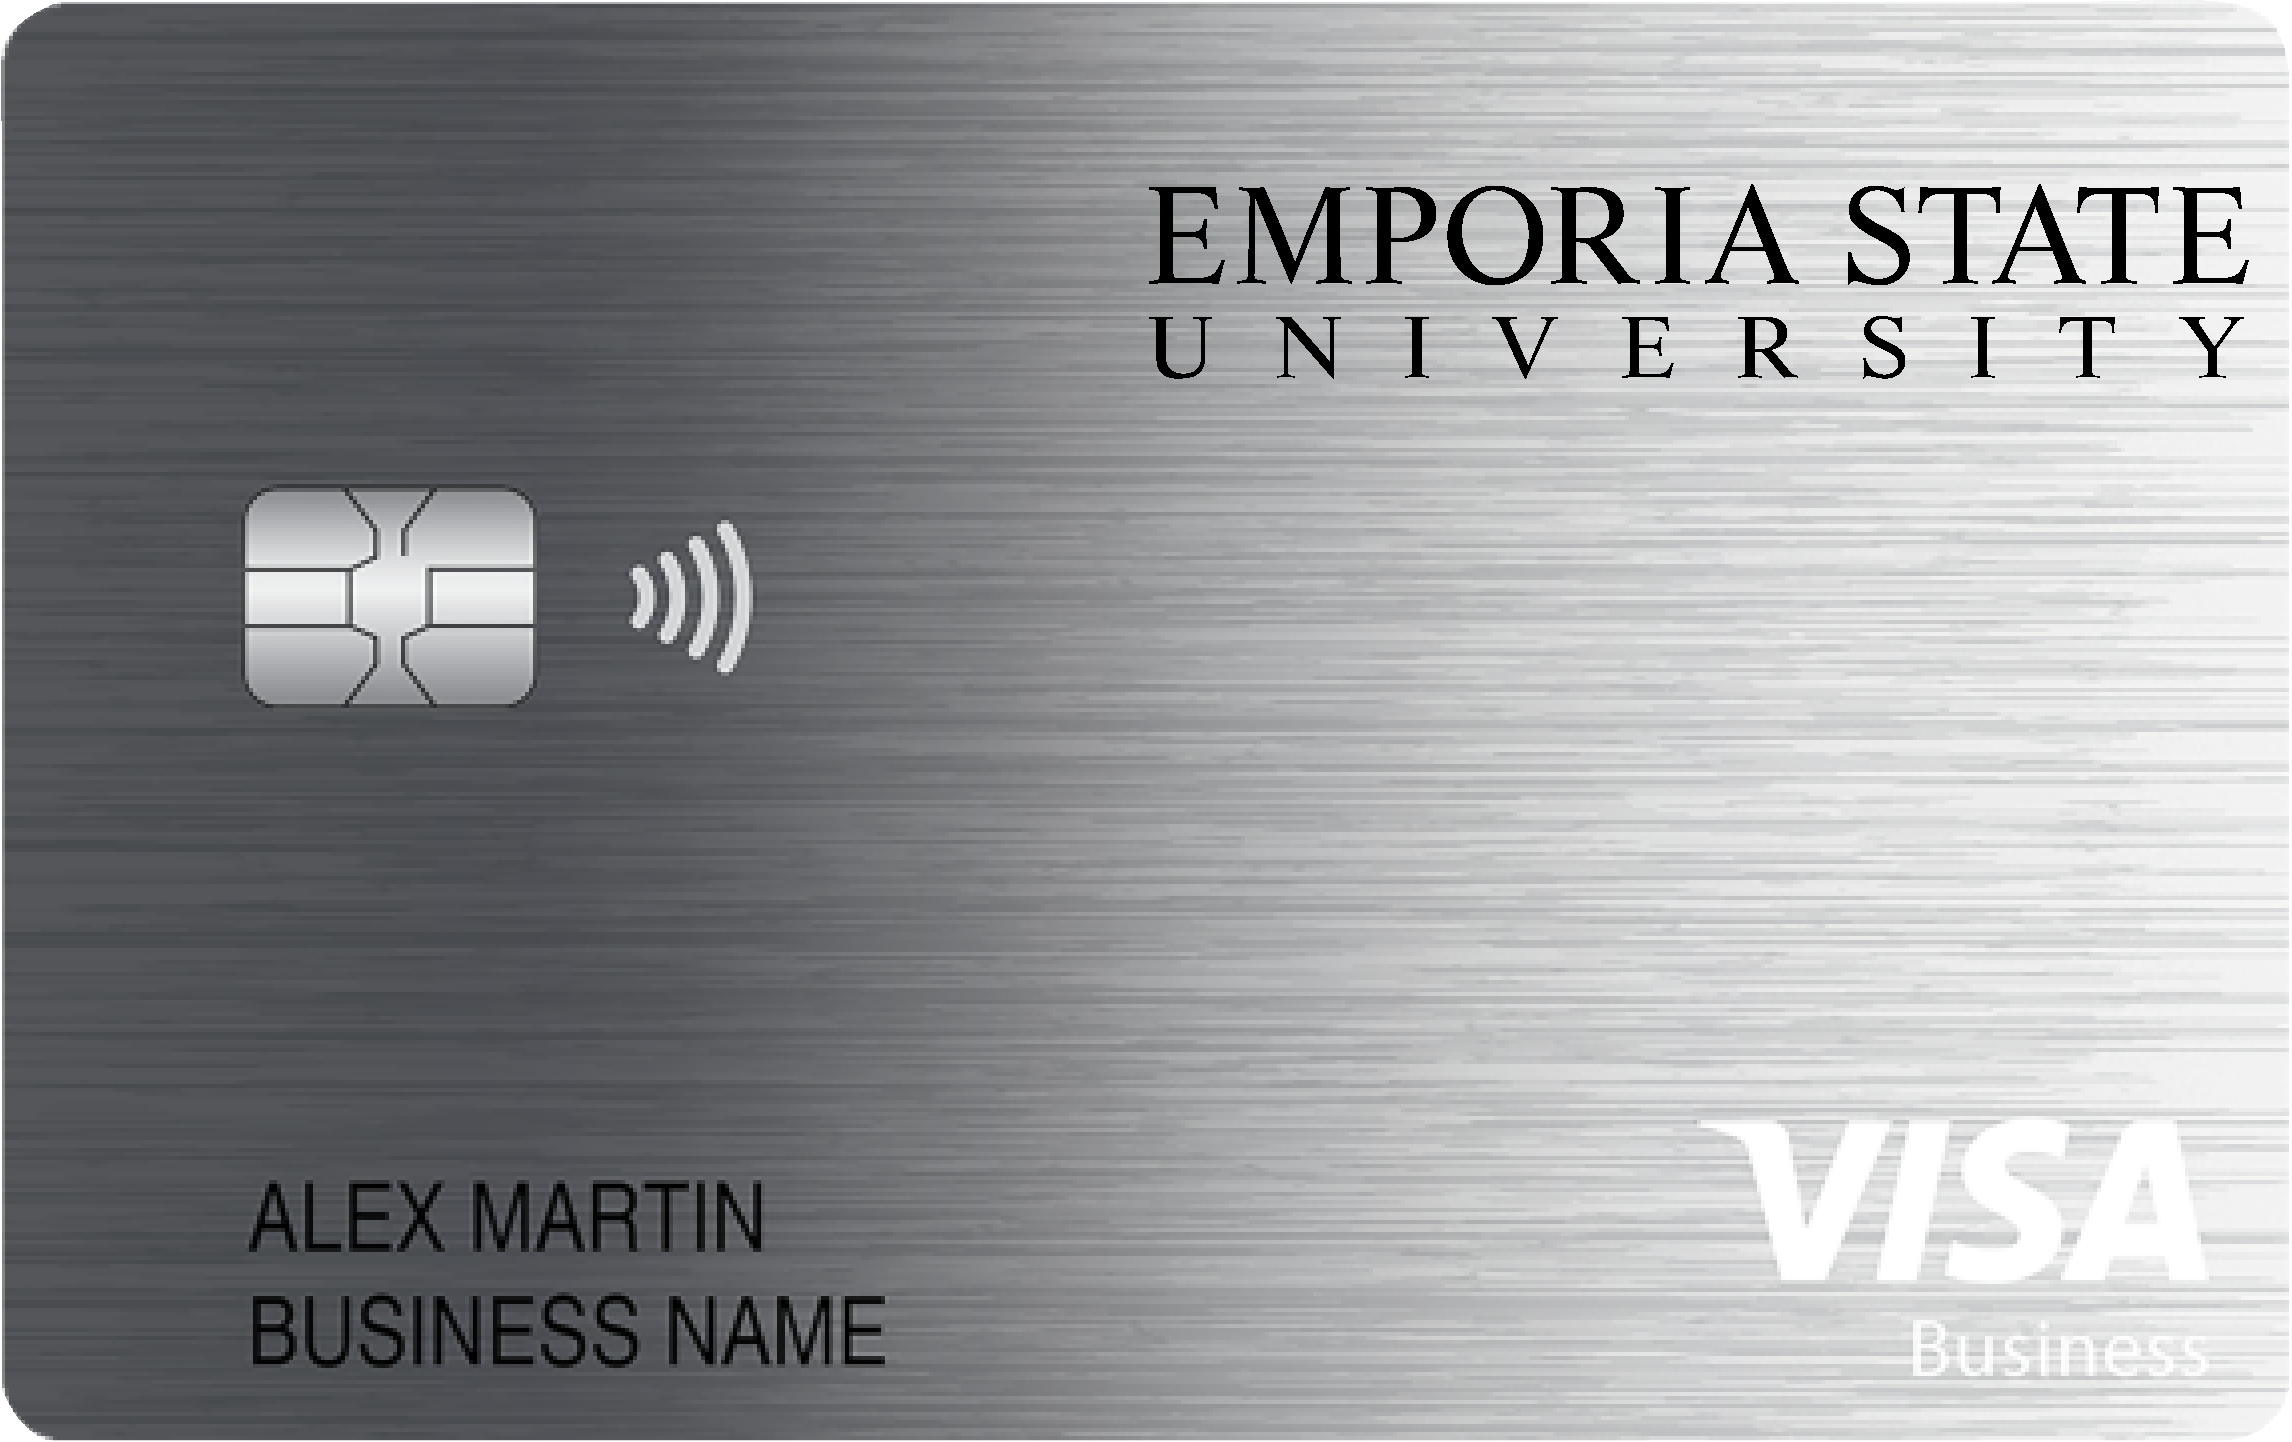 INTRUST Bank Emporia State University Business Card Card